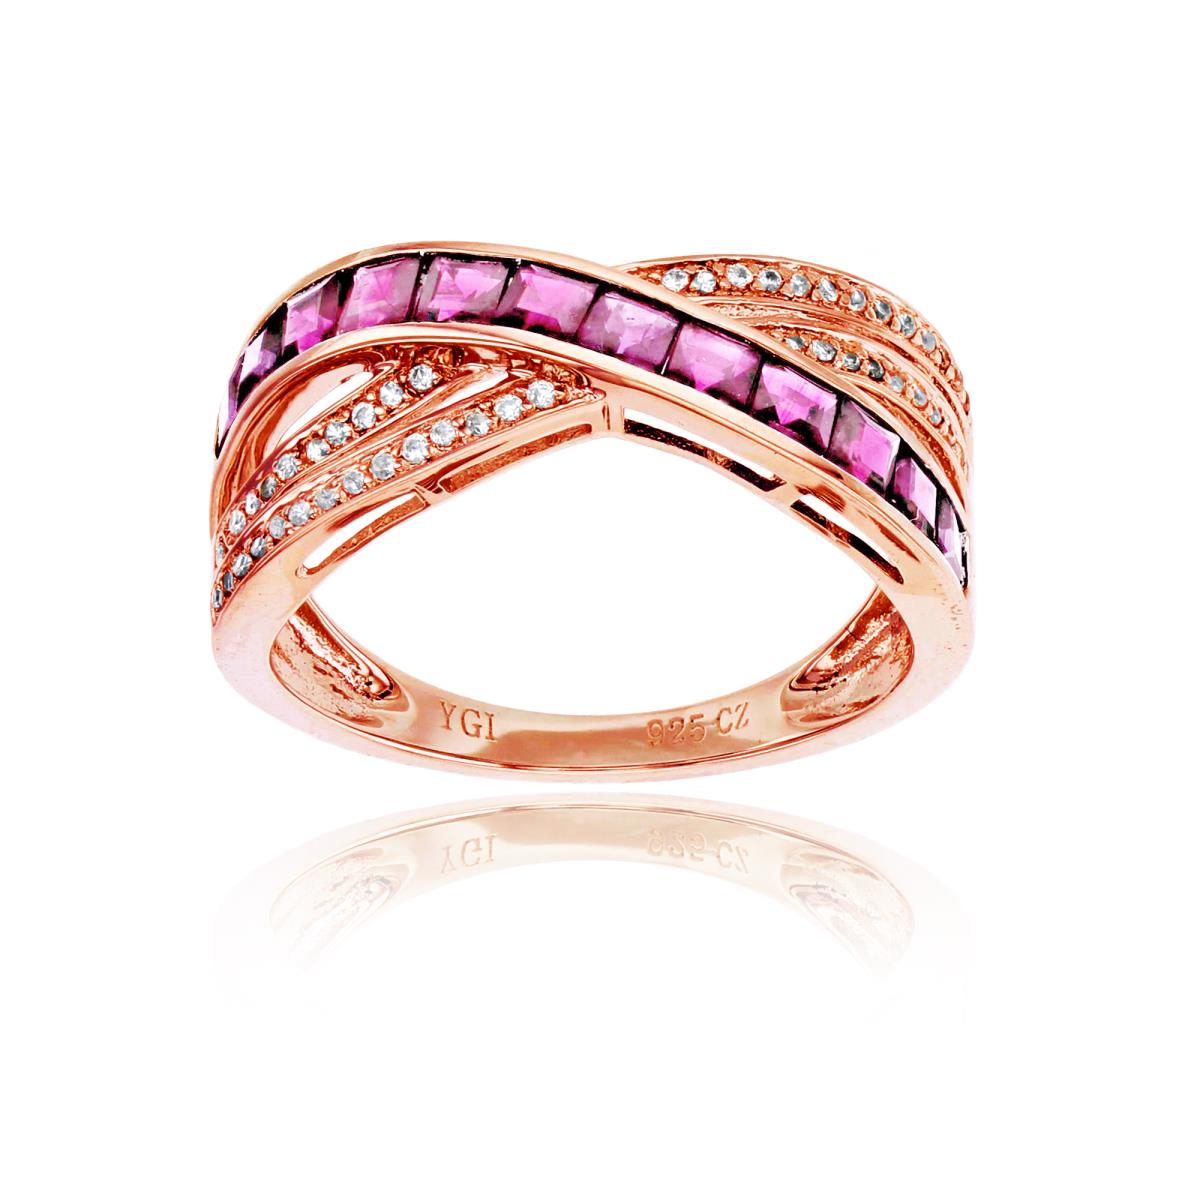 14K Rose Gold 0.14 CTTW Rnd Diam & 2.5mm Sq Pink Sapphire Criss/Cross Ring